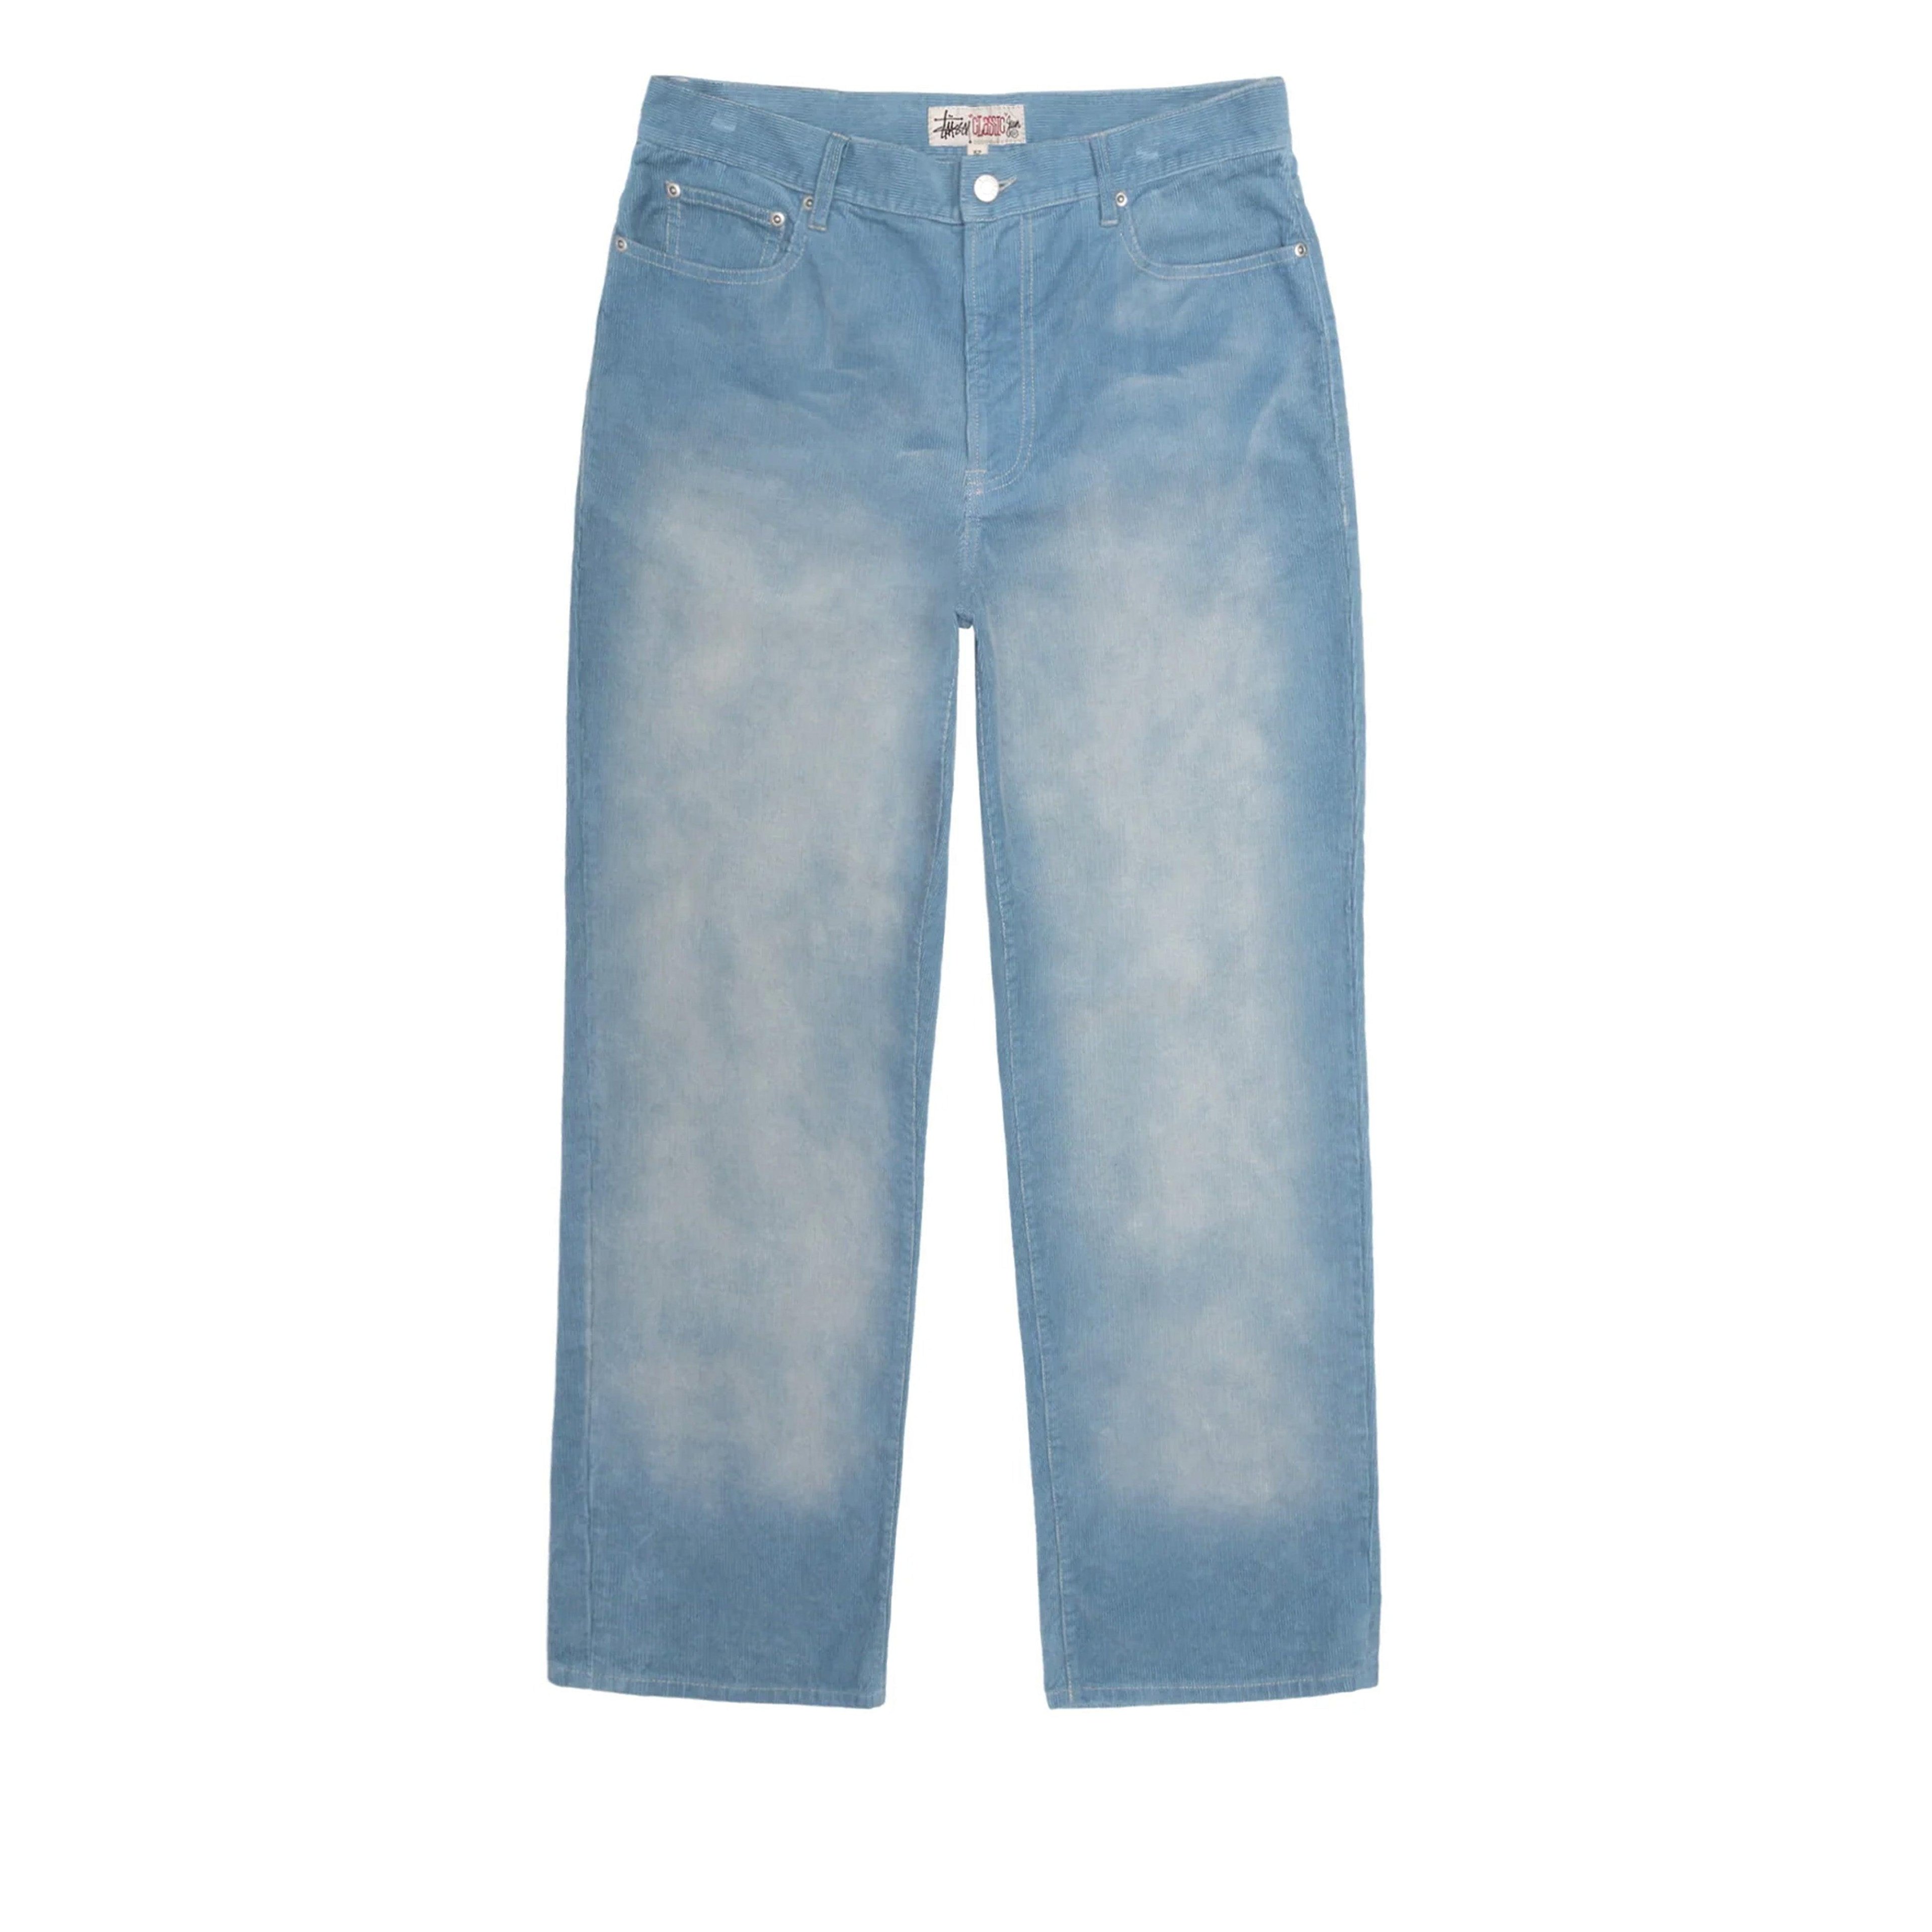 Stüssy - Men's Faded Corduroy Classic Jeans - (Denim Blue) by STUSSY